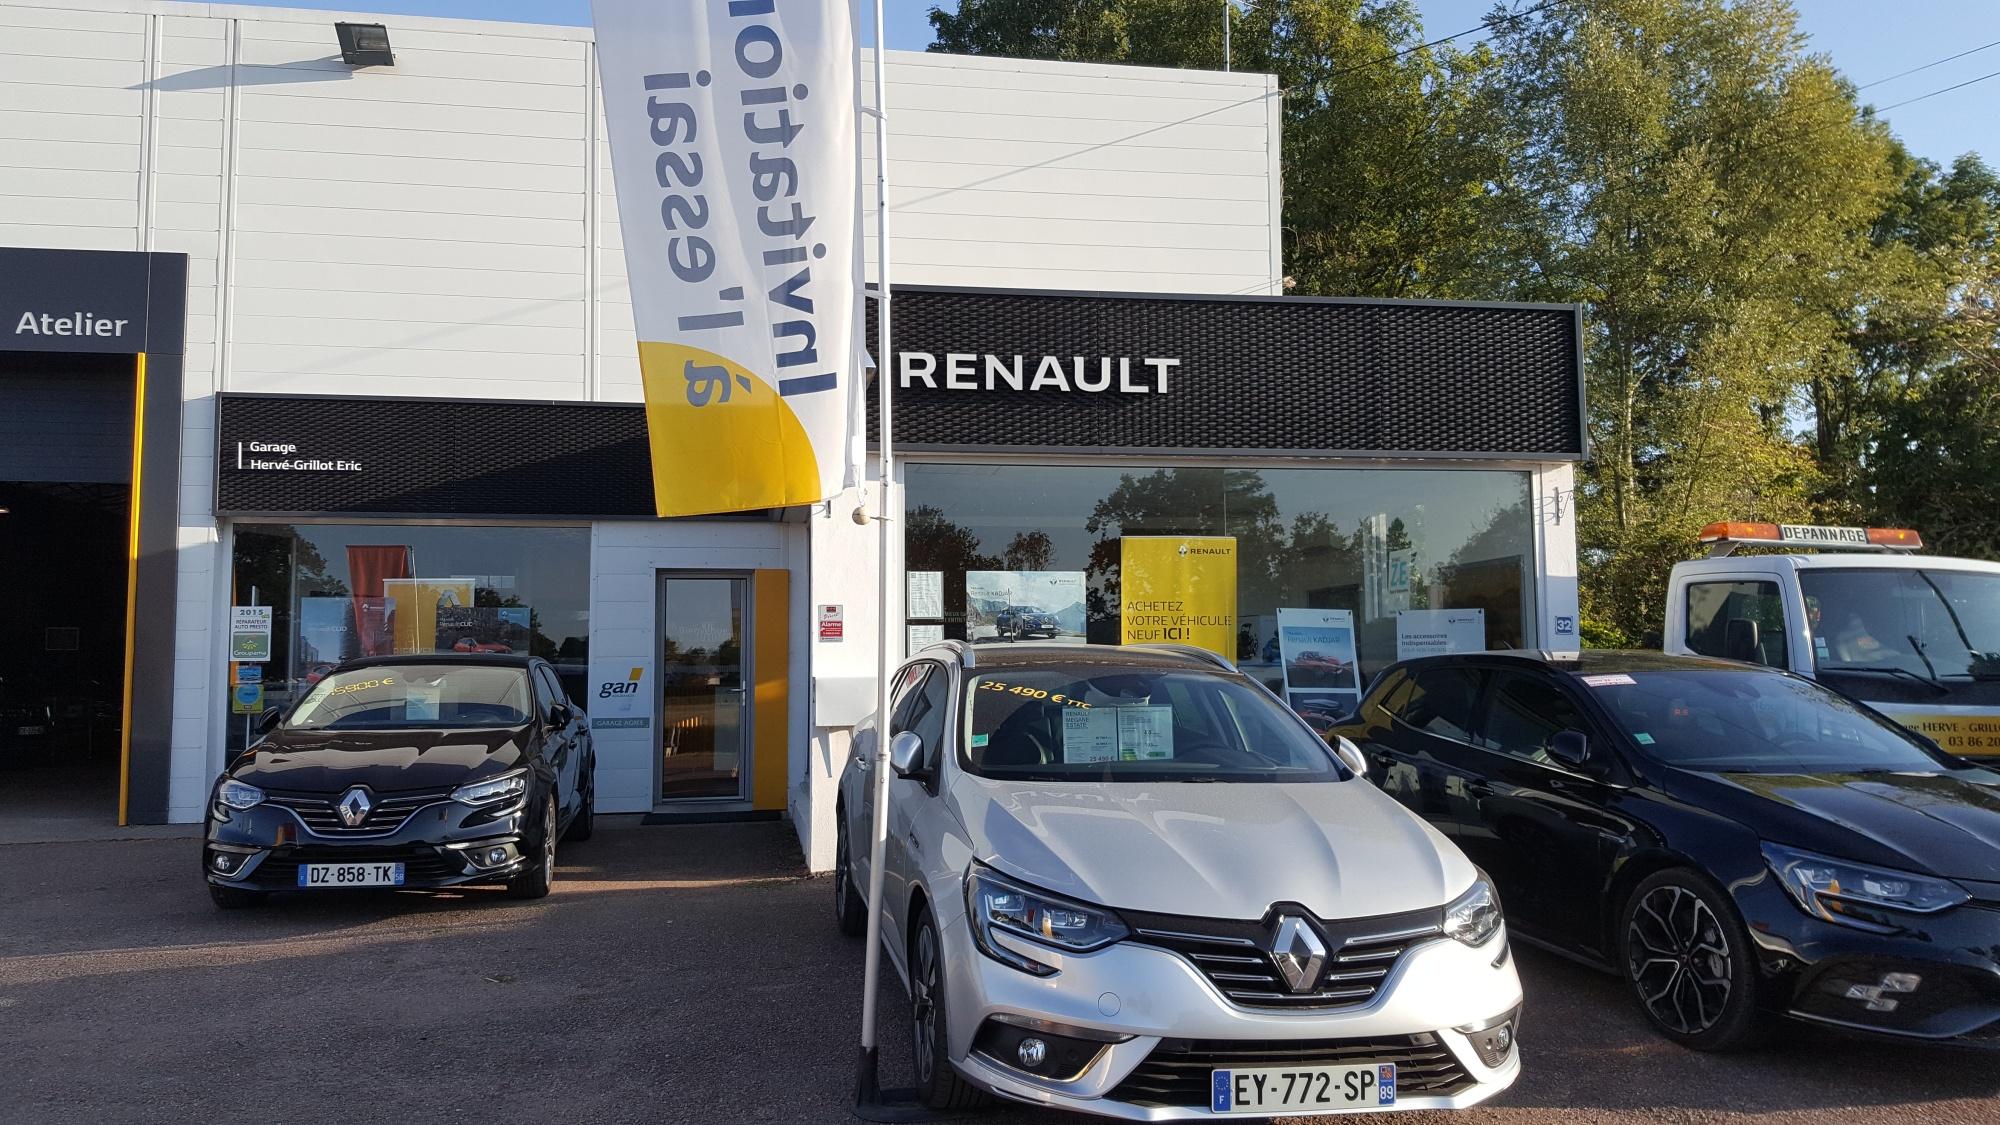 Renault Garage Herve Grillot Eric Corbigny